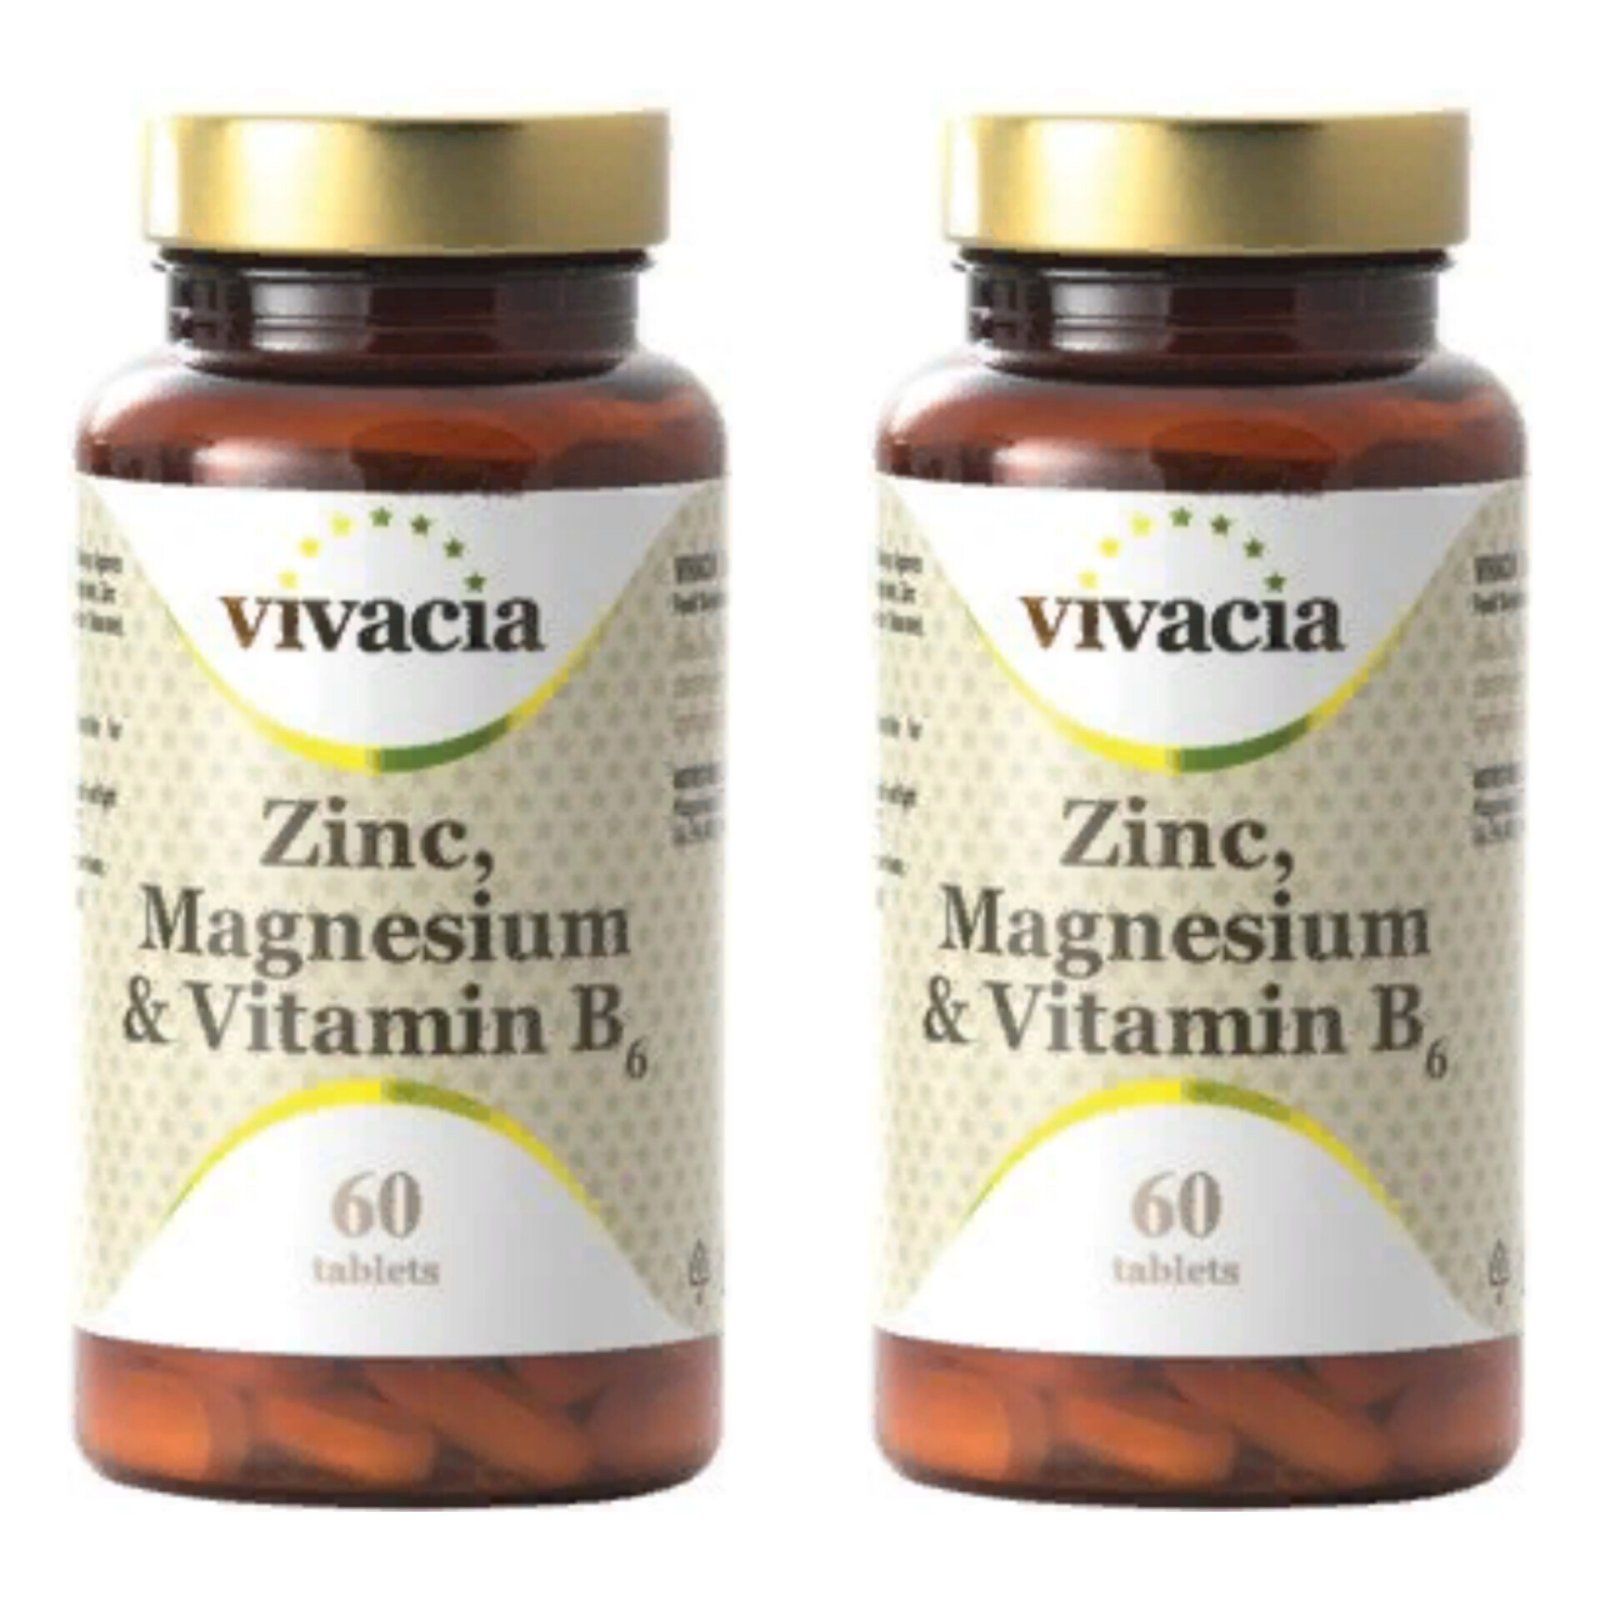 Vivacia vitamin. Витамины vivacia Magnesium. Вивация магний цинк. Магний цинк b6. Vivacia цинк магний и витамин с.